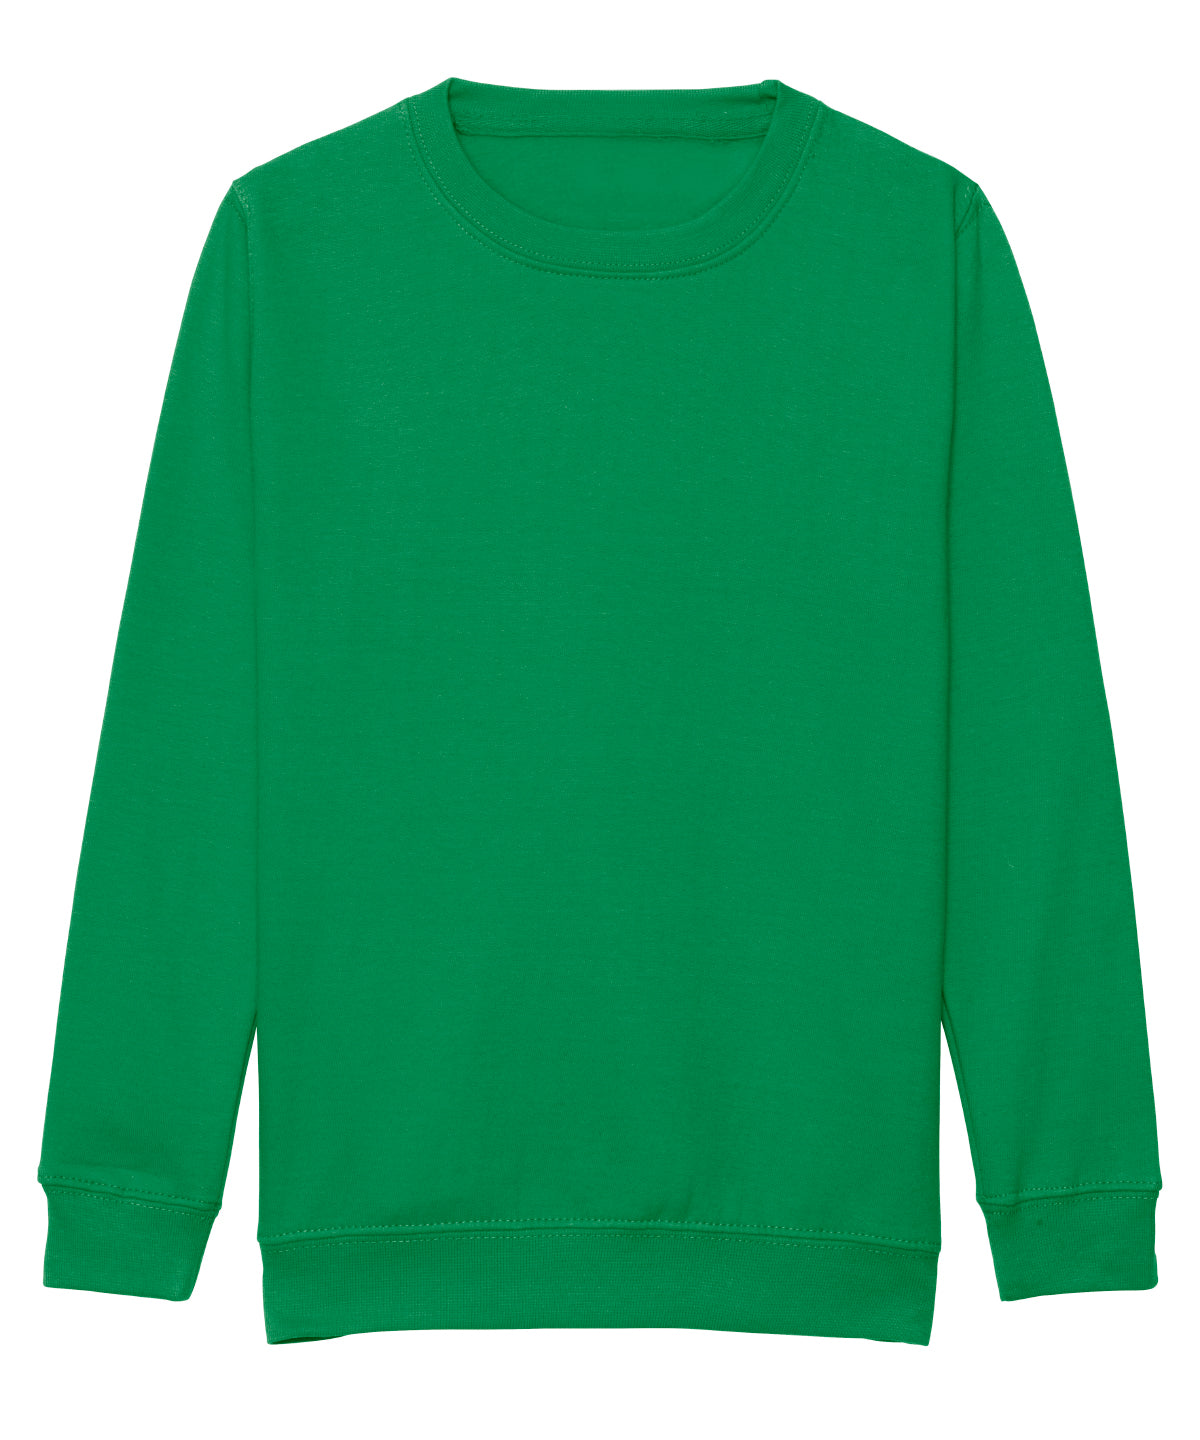 Personalised Sweatshirts - Navy AWDis Just Hoods Kids AWDis sweatshirt